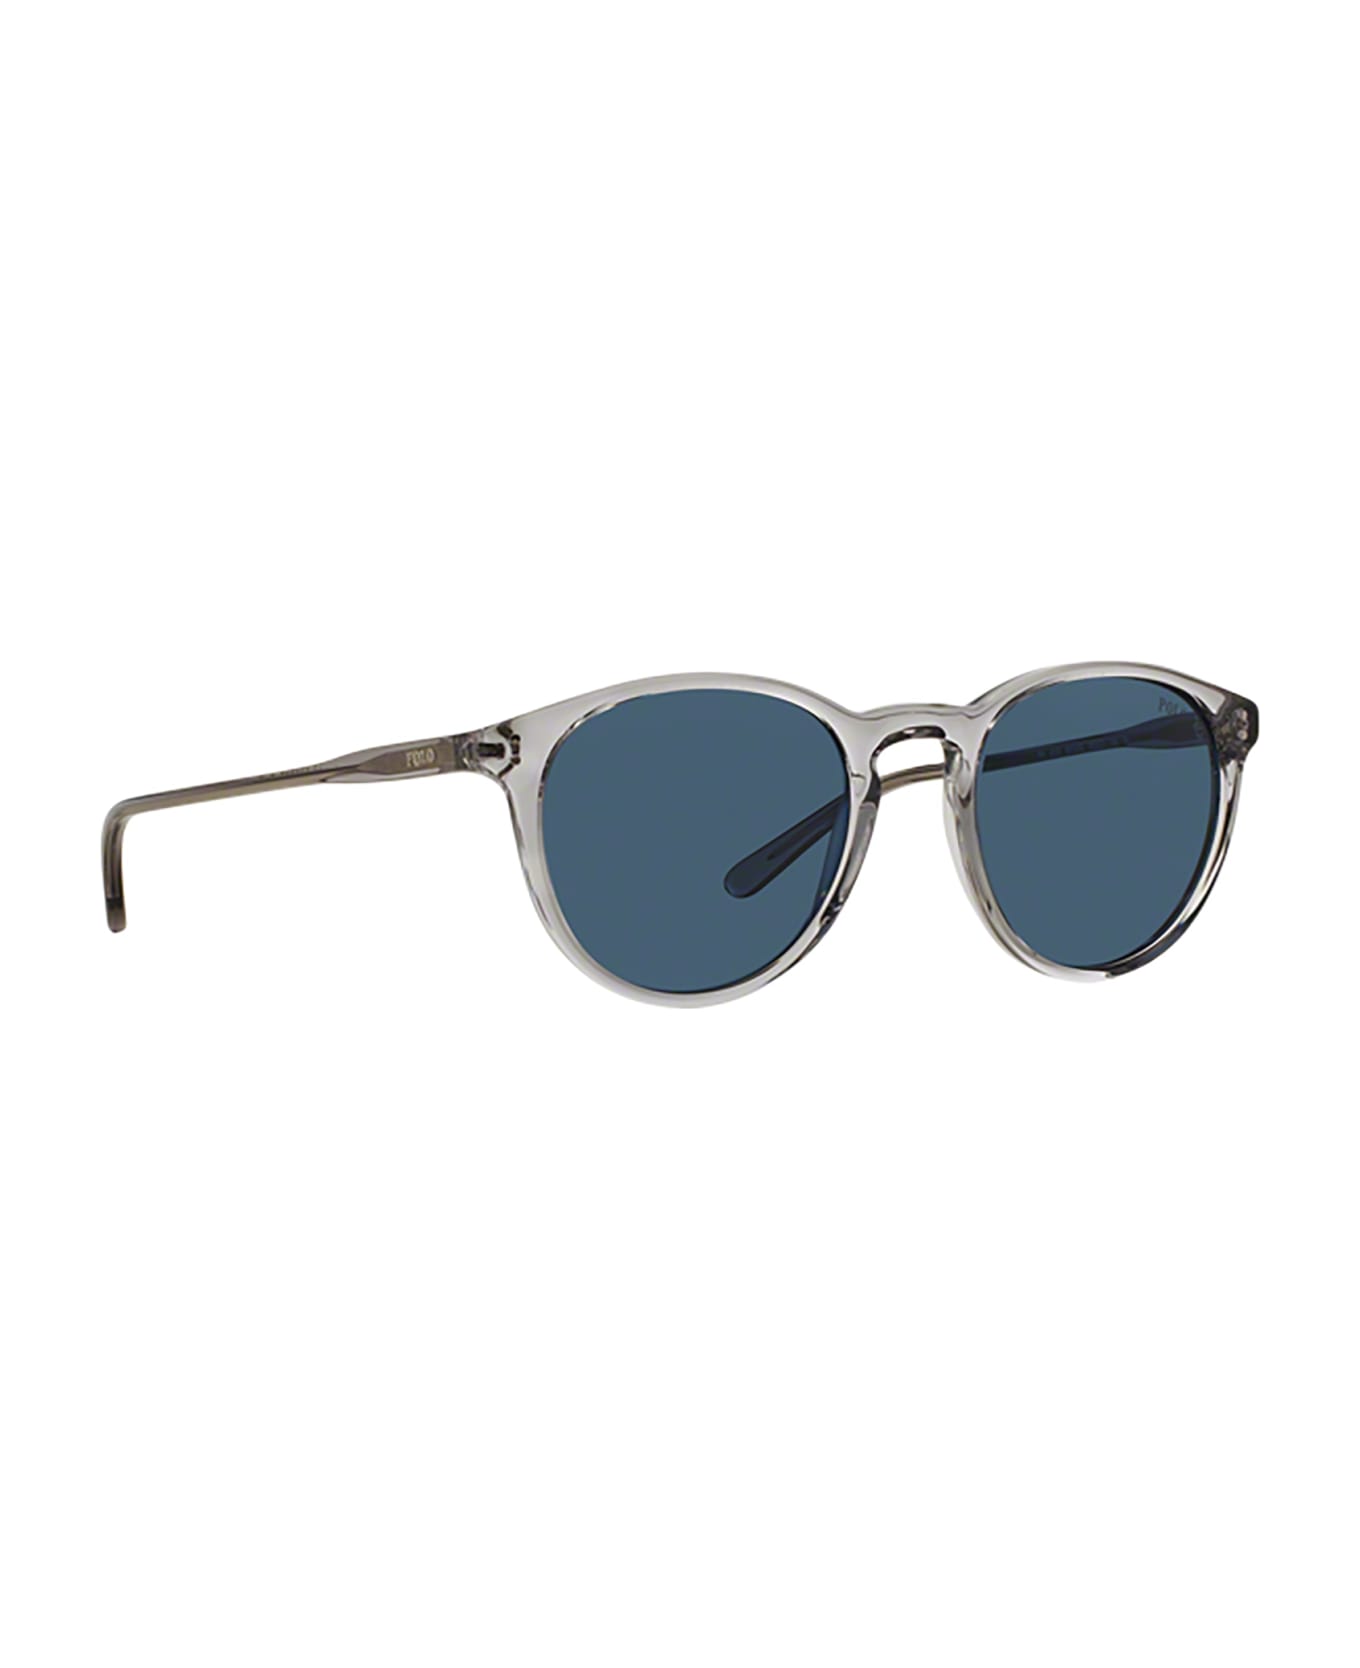 Polo Ralph Lauren Ph4110 Shiny Semi-transparent Grey Sunglasses - SHINY SEMI-TRANSPARENT GREY